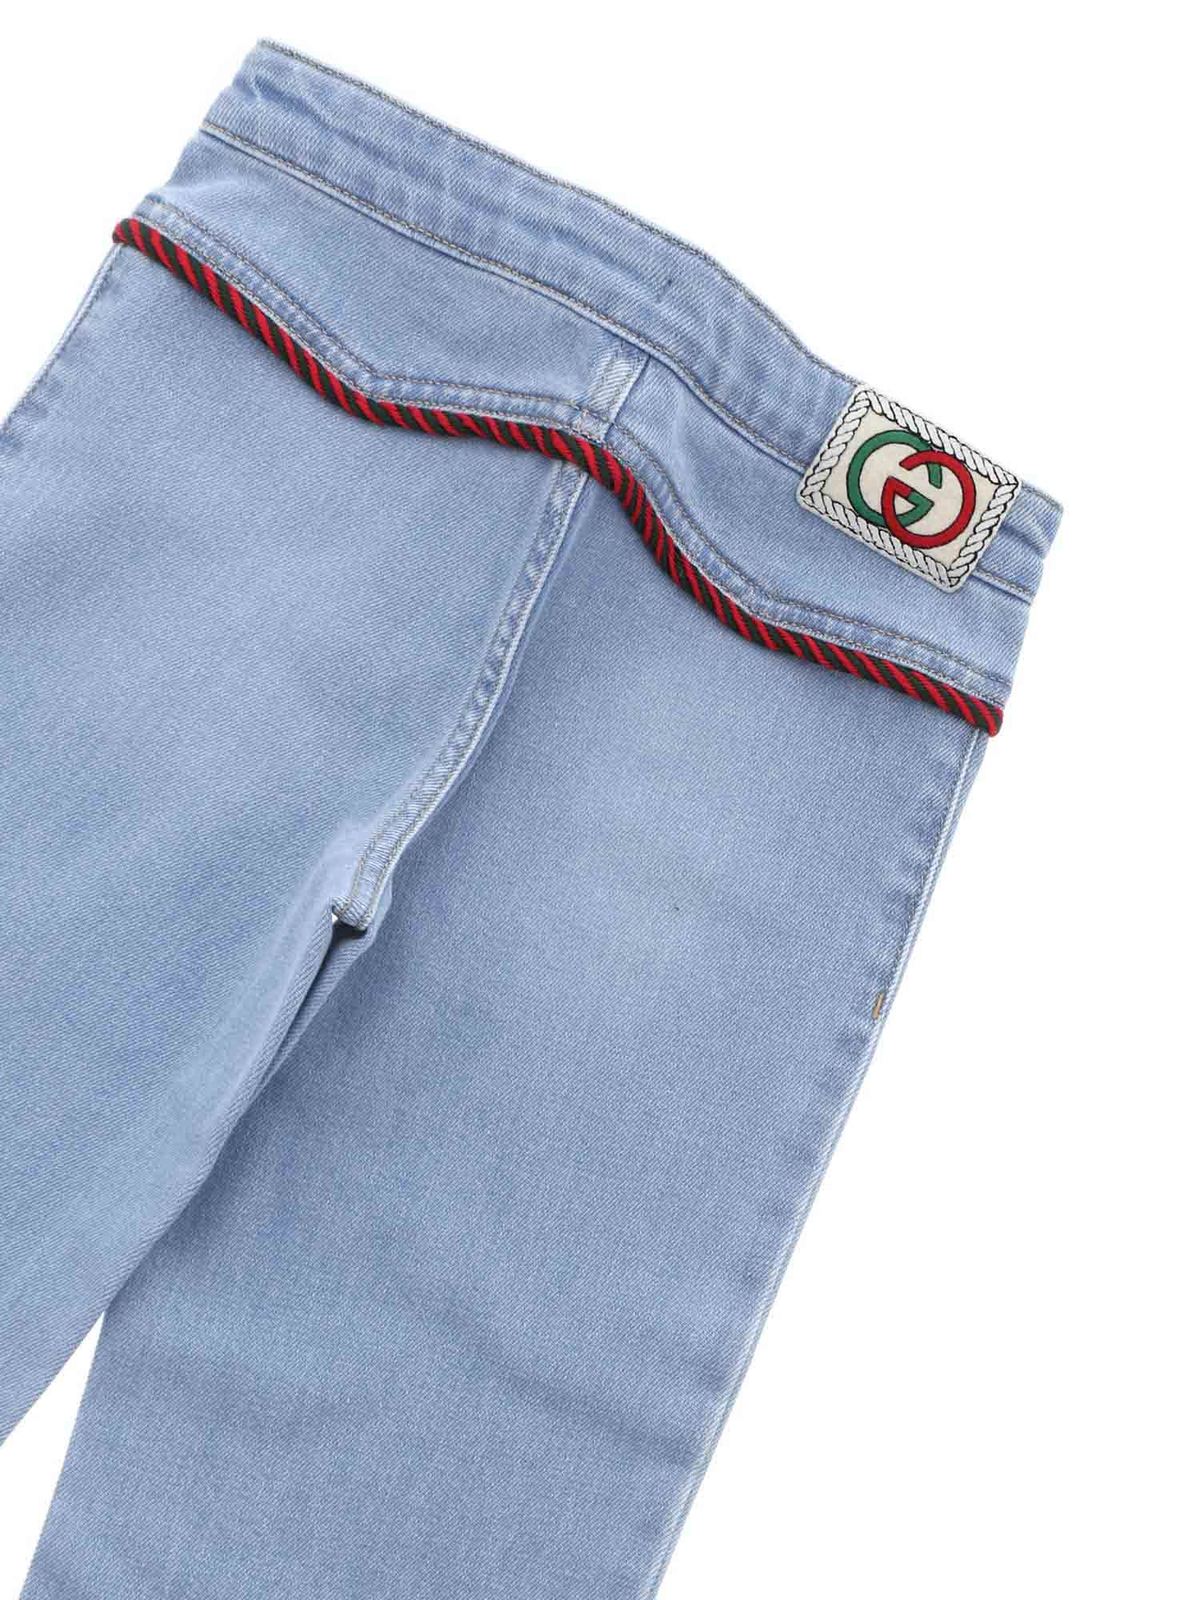 gucci original jeans